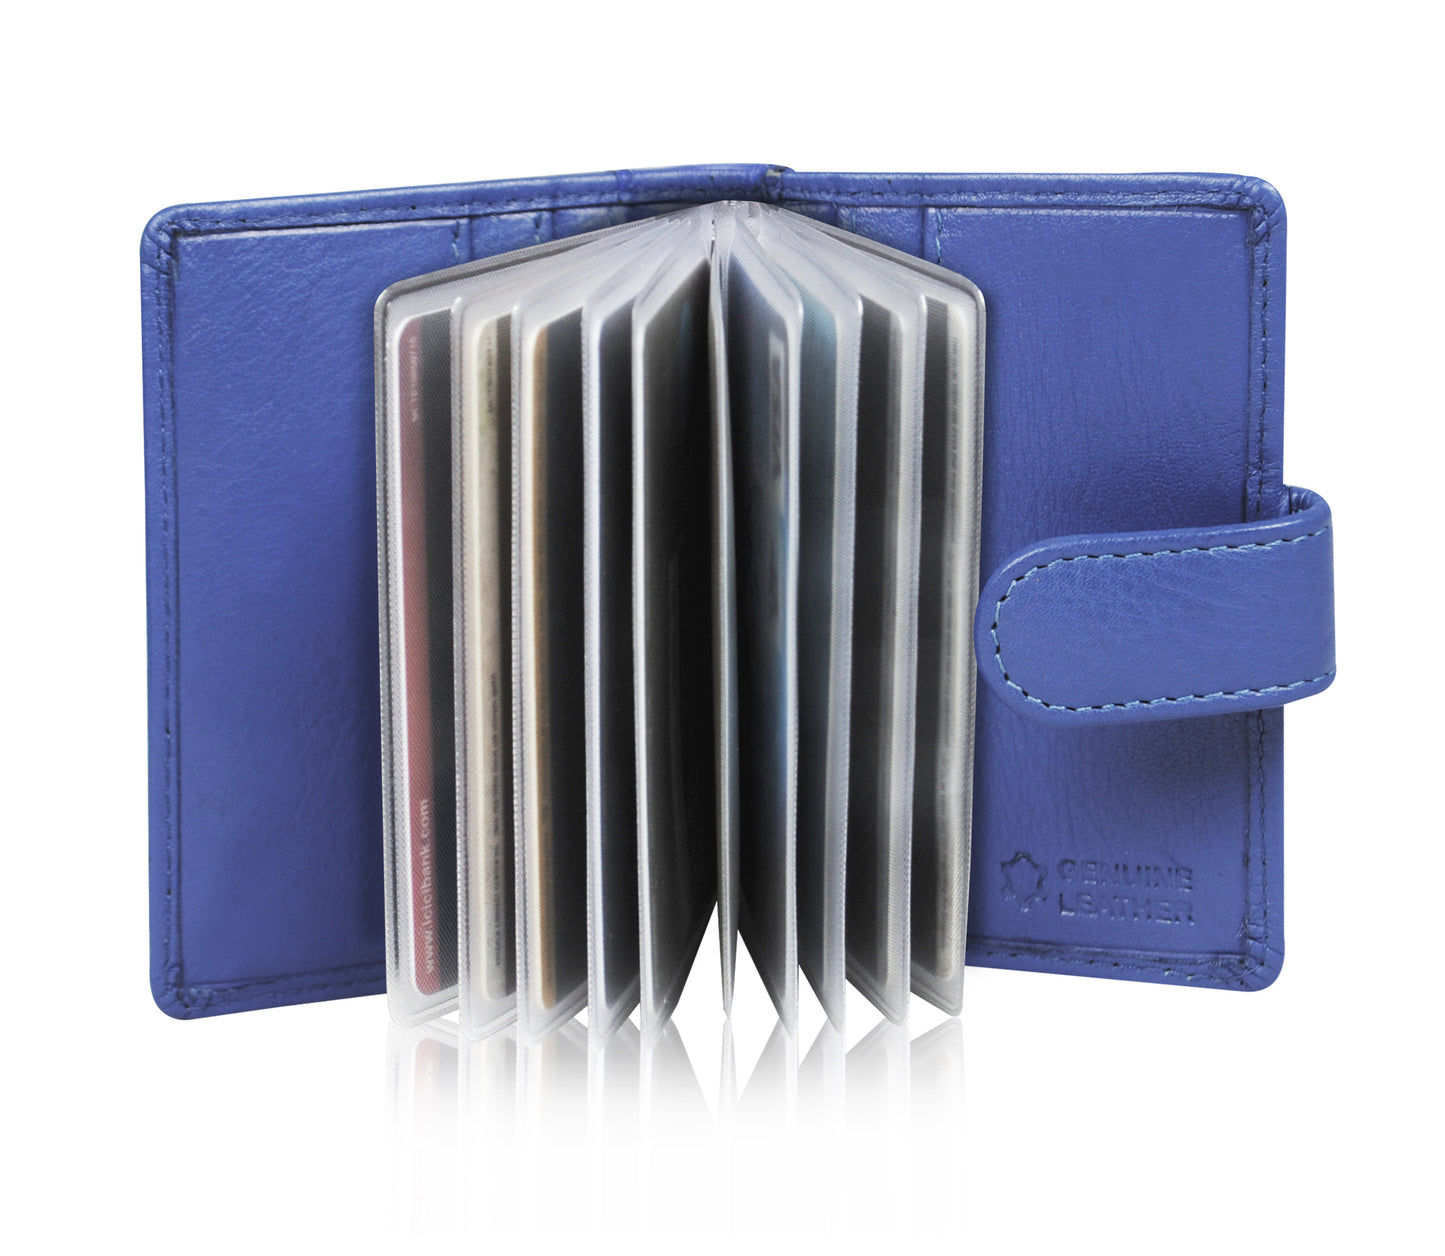 Calfnero Genuine Leather Card Case wallet (602-R-BLUE)